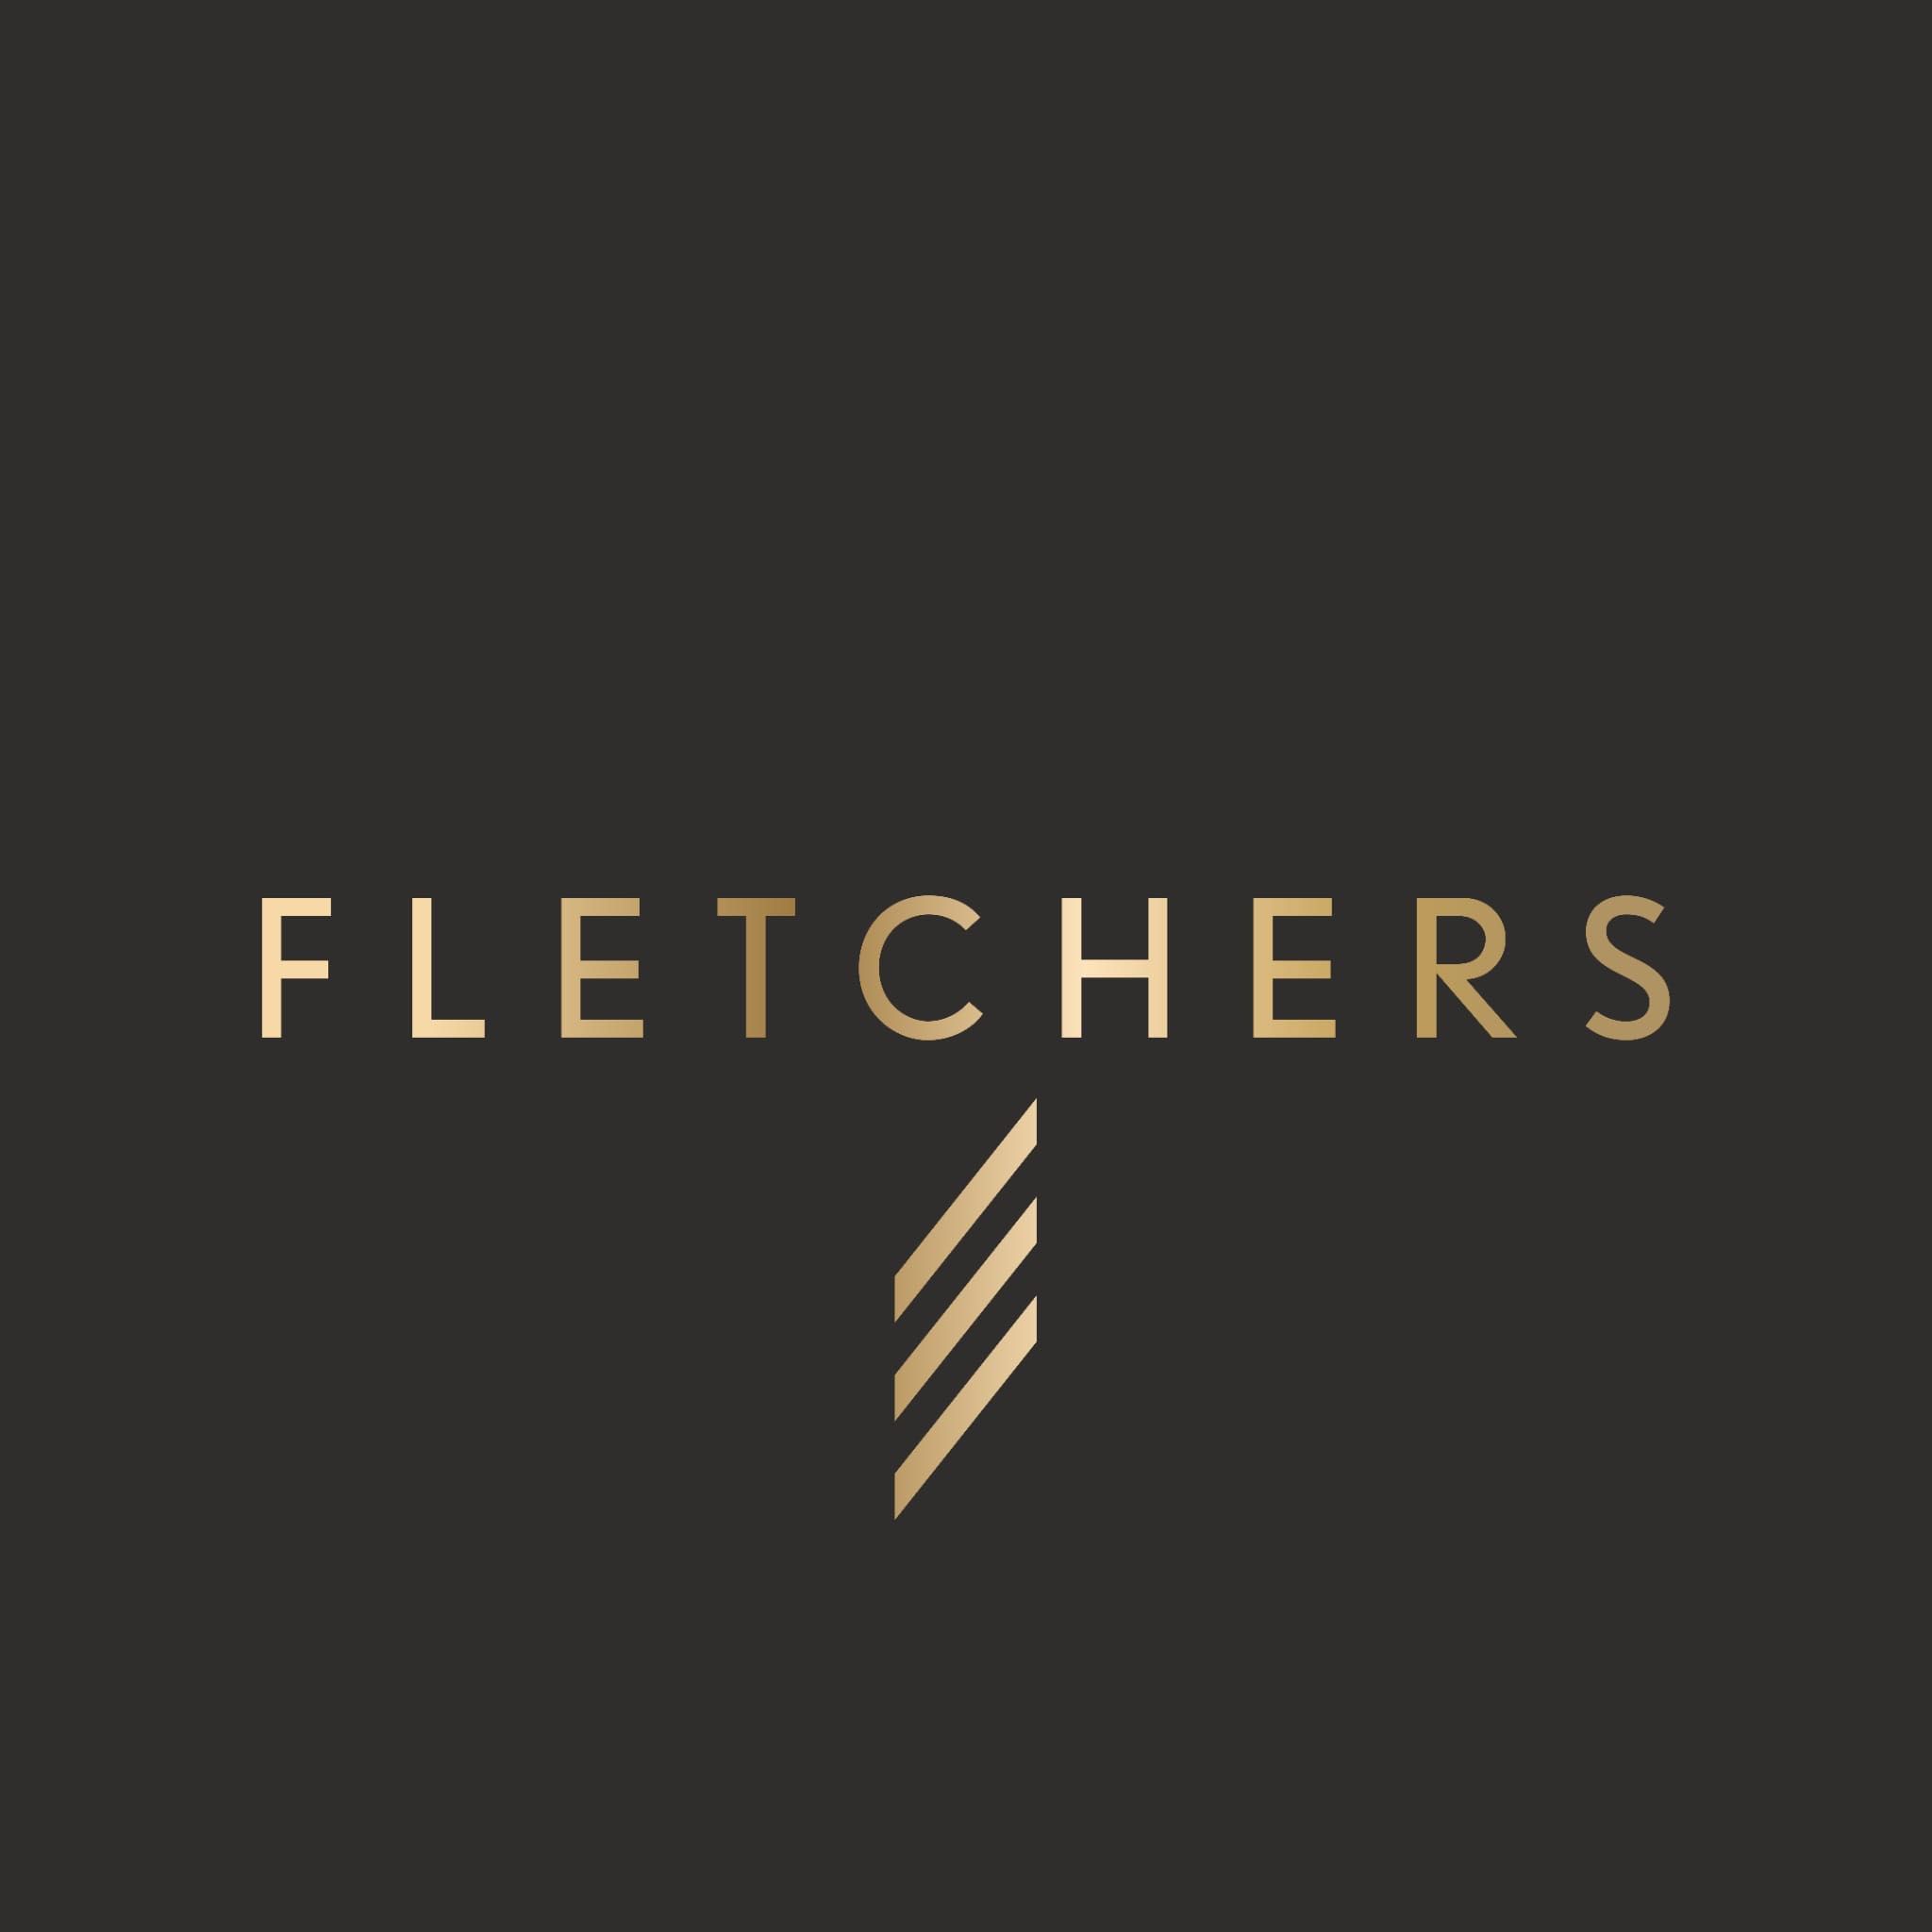 Fletchers Gents Grooming, 20 Church Road, SK8 4NQ, Cheadle